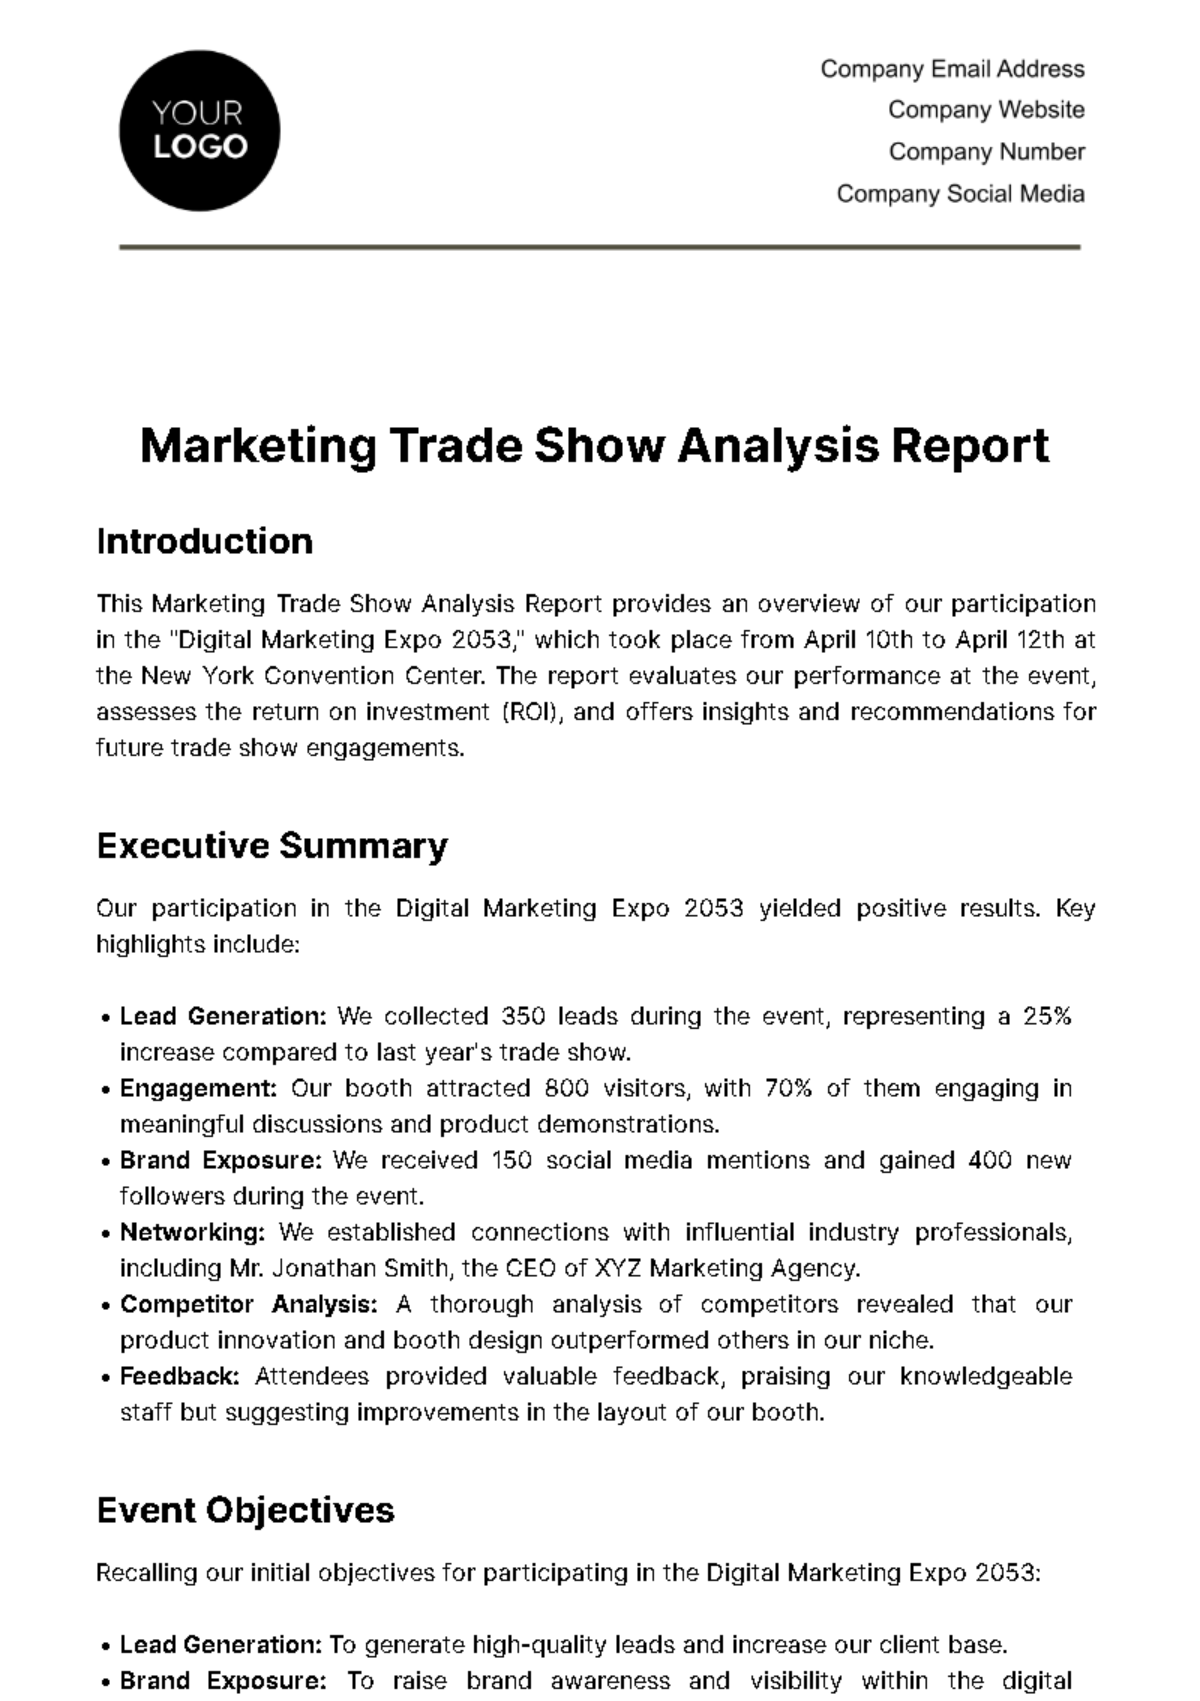 Marketing Trade Show Analysis Report Template